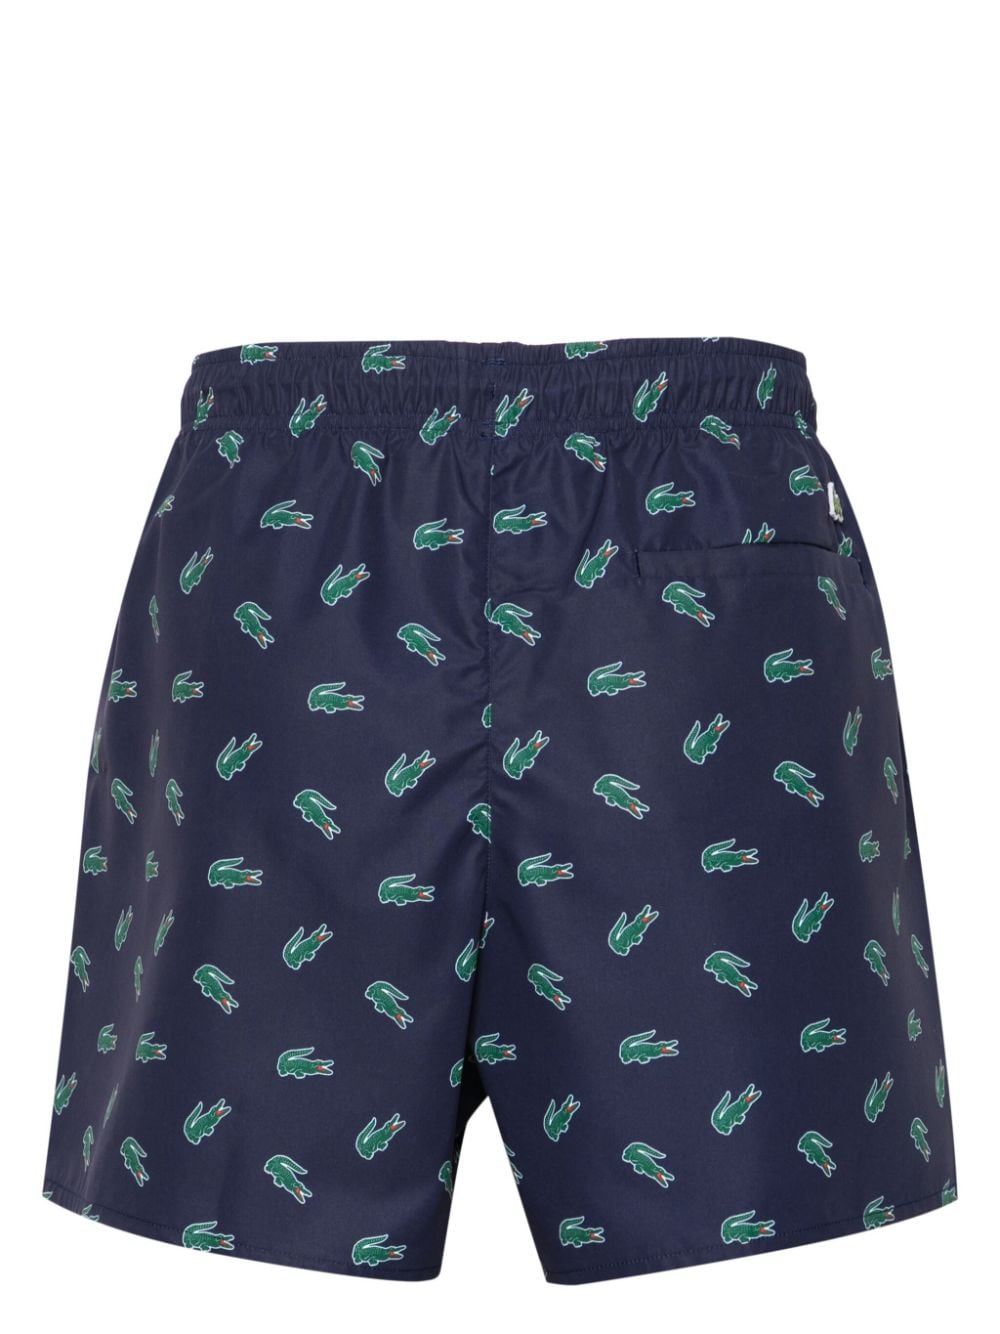 Blue Crocodile-print drawstring swim shorts<BR/><BR/>